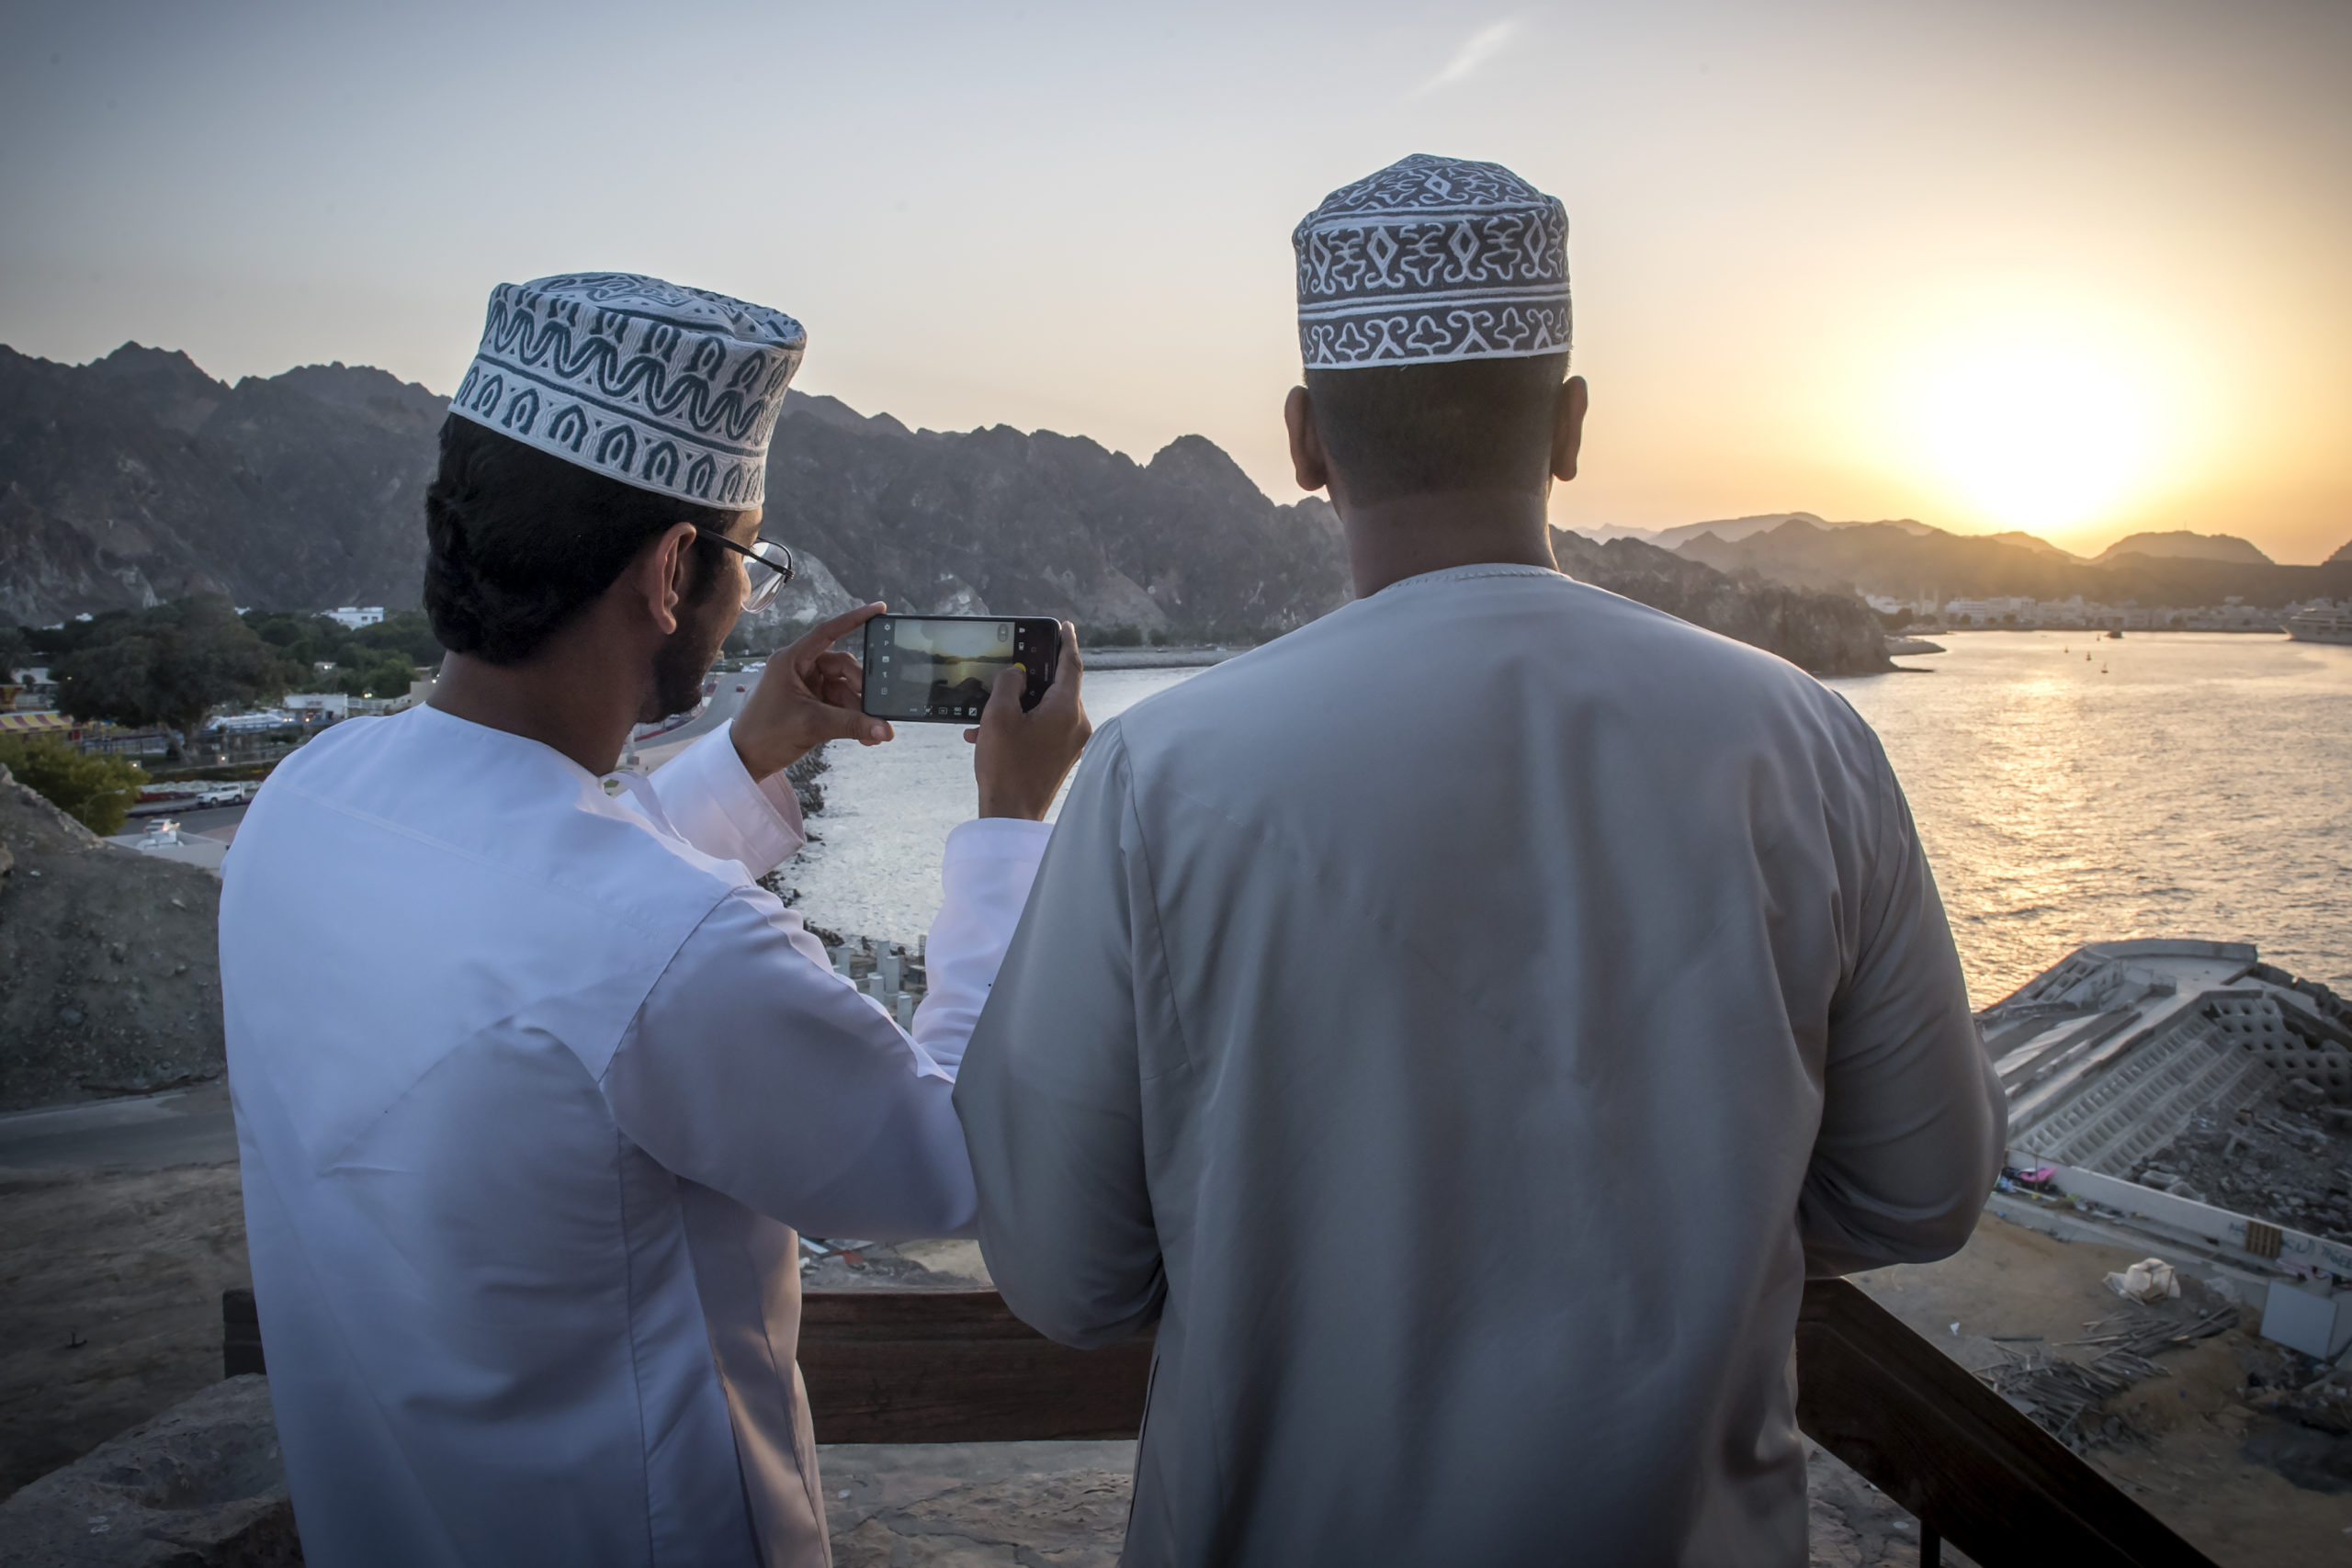 03.02.2019; Voile; Mascate(Oman); Sailing Arabia The Tour 2019; Tour d'Oman en trimaran Diam 24; Ambiance Tourisme a Mascate
photo Jean-Guy Python